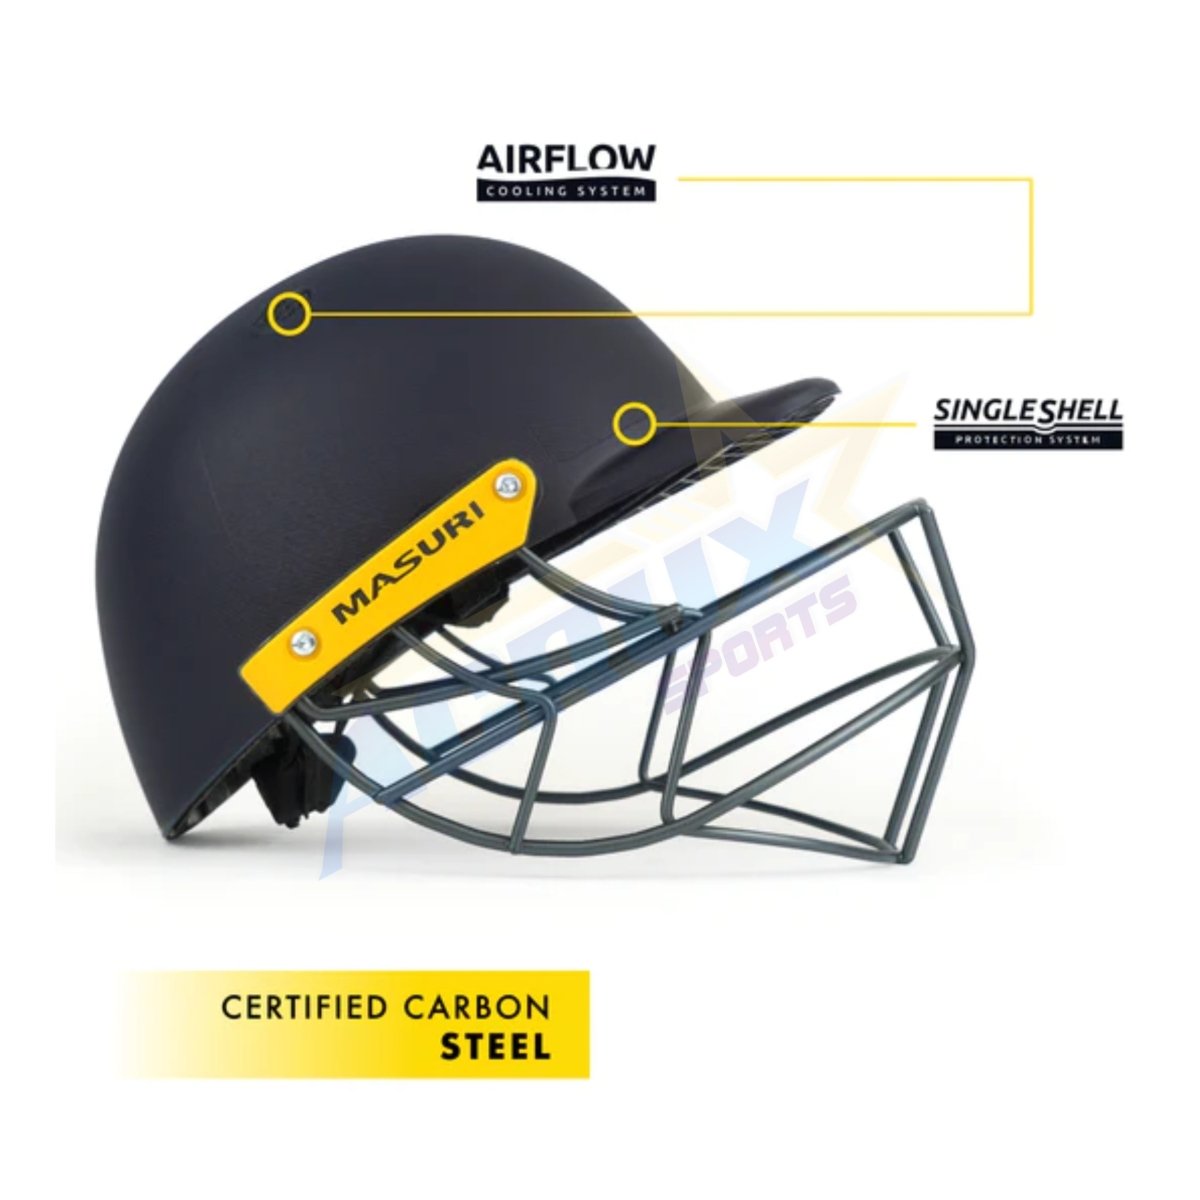 Masuri C Line Steel Junior Cricket Helmet - Acrux Sports